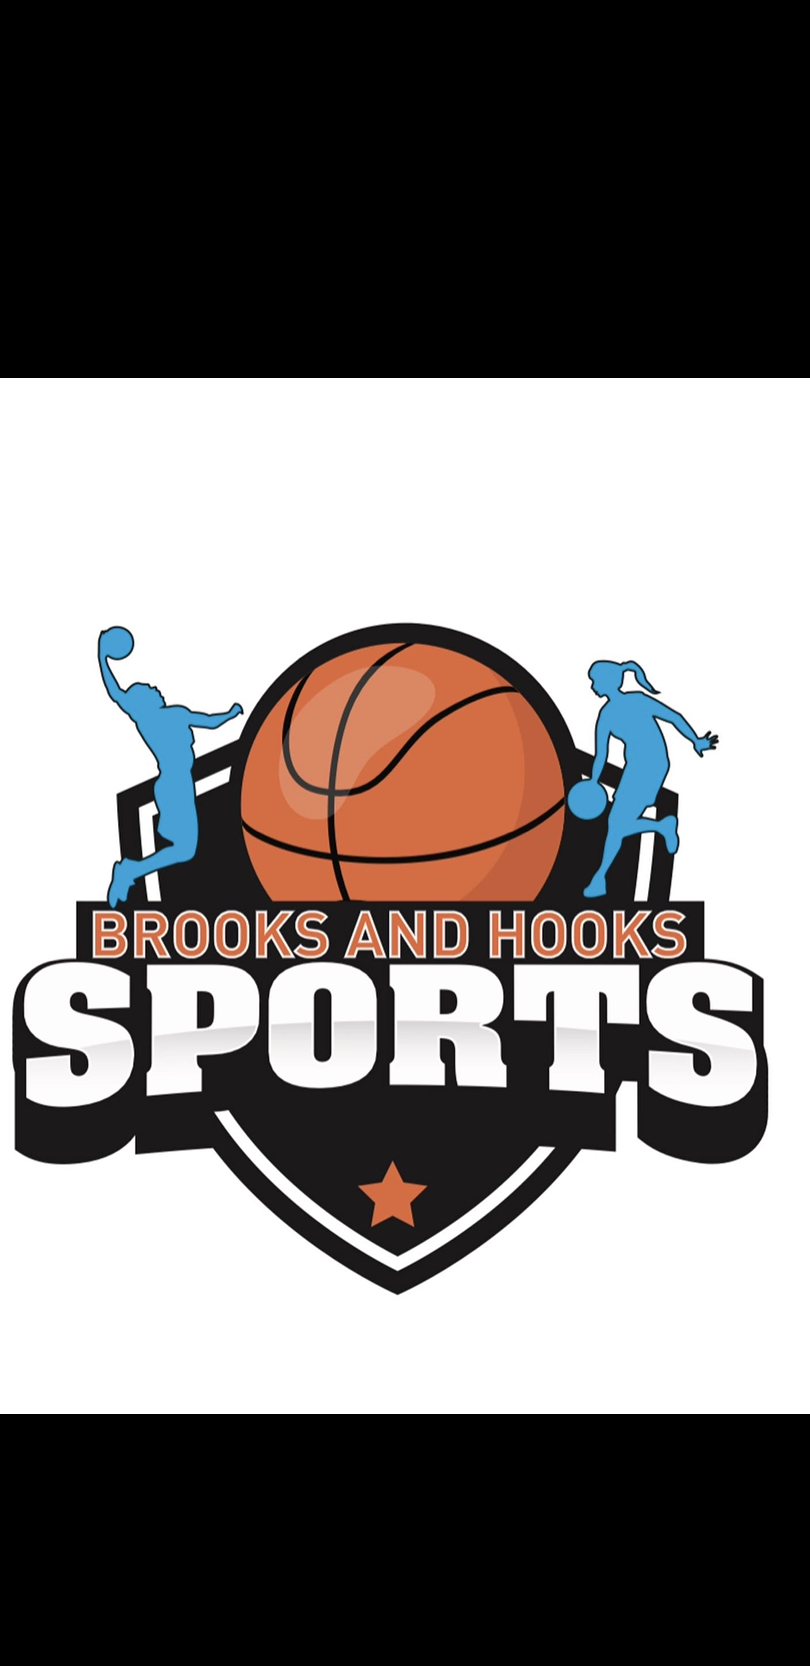 Brooks and Hooks sports logo